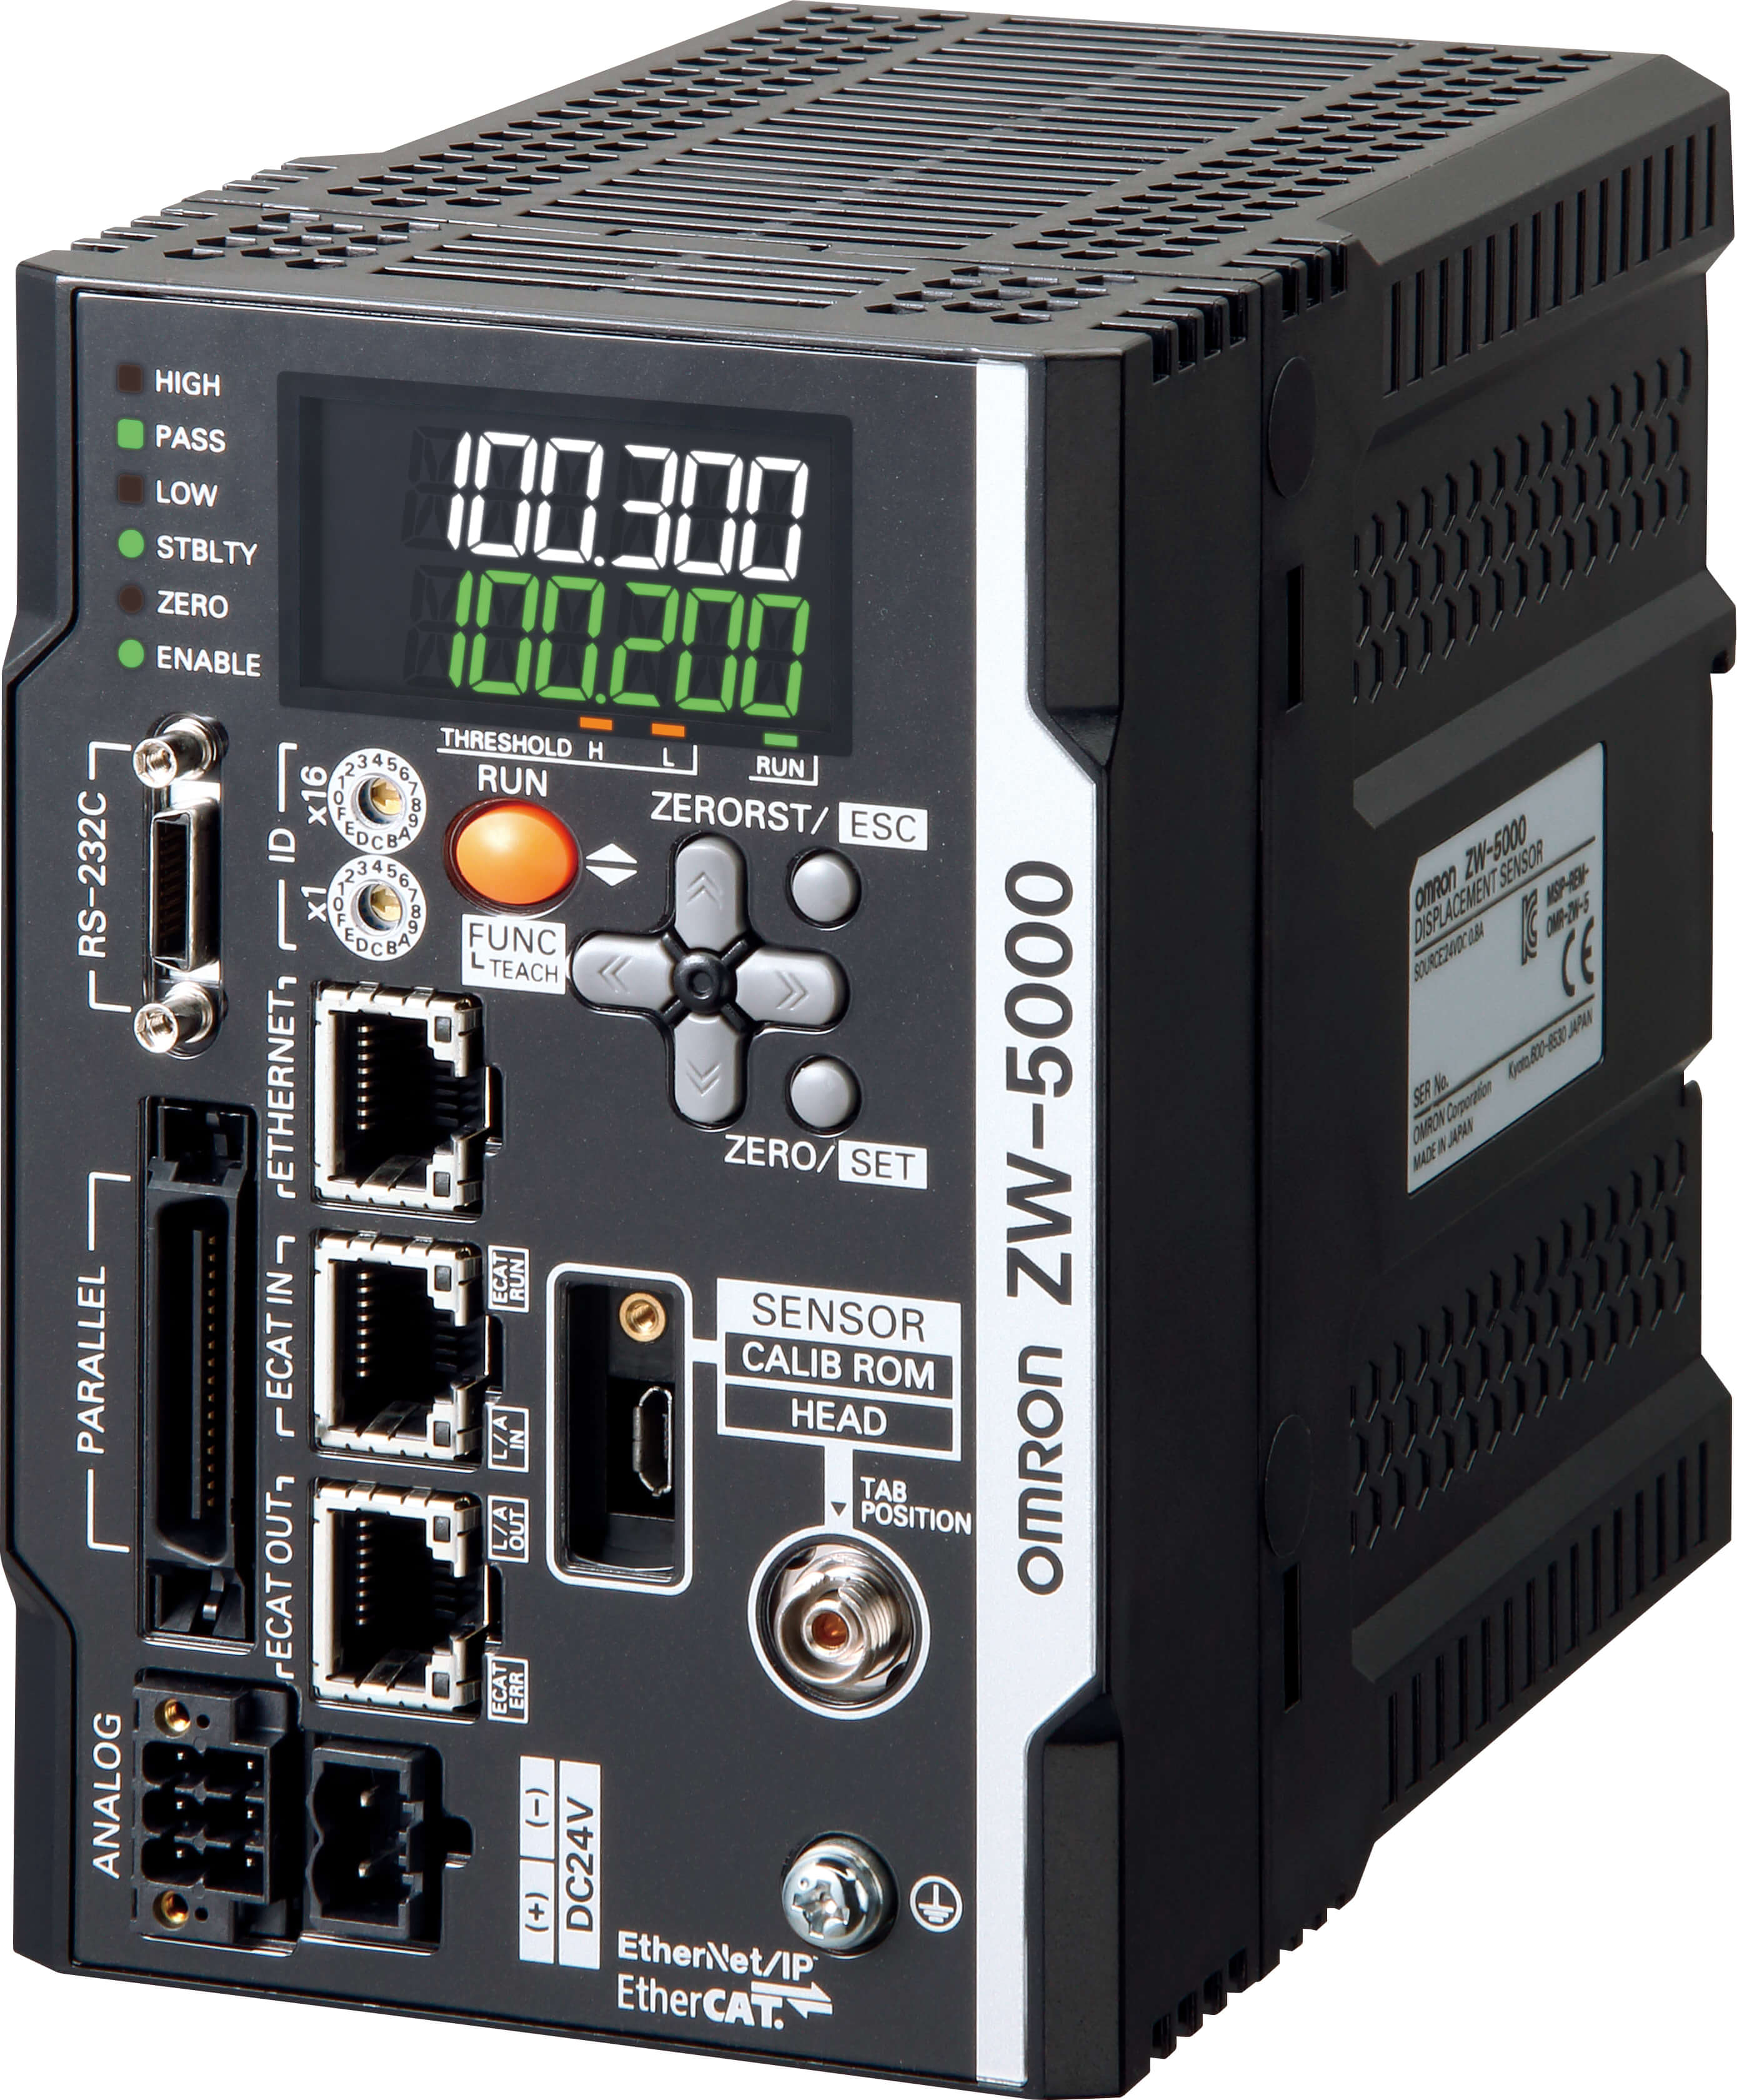 sensor controller zw-5000t prod